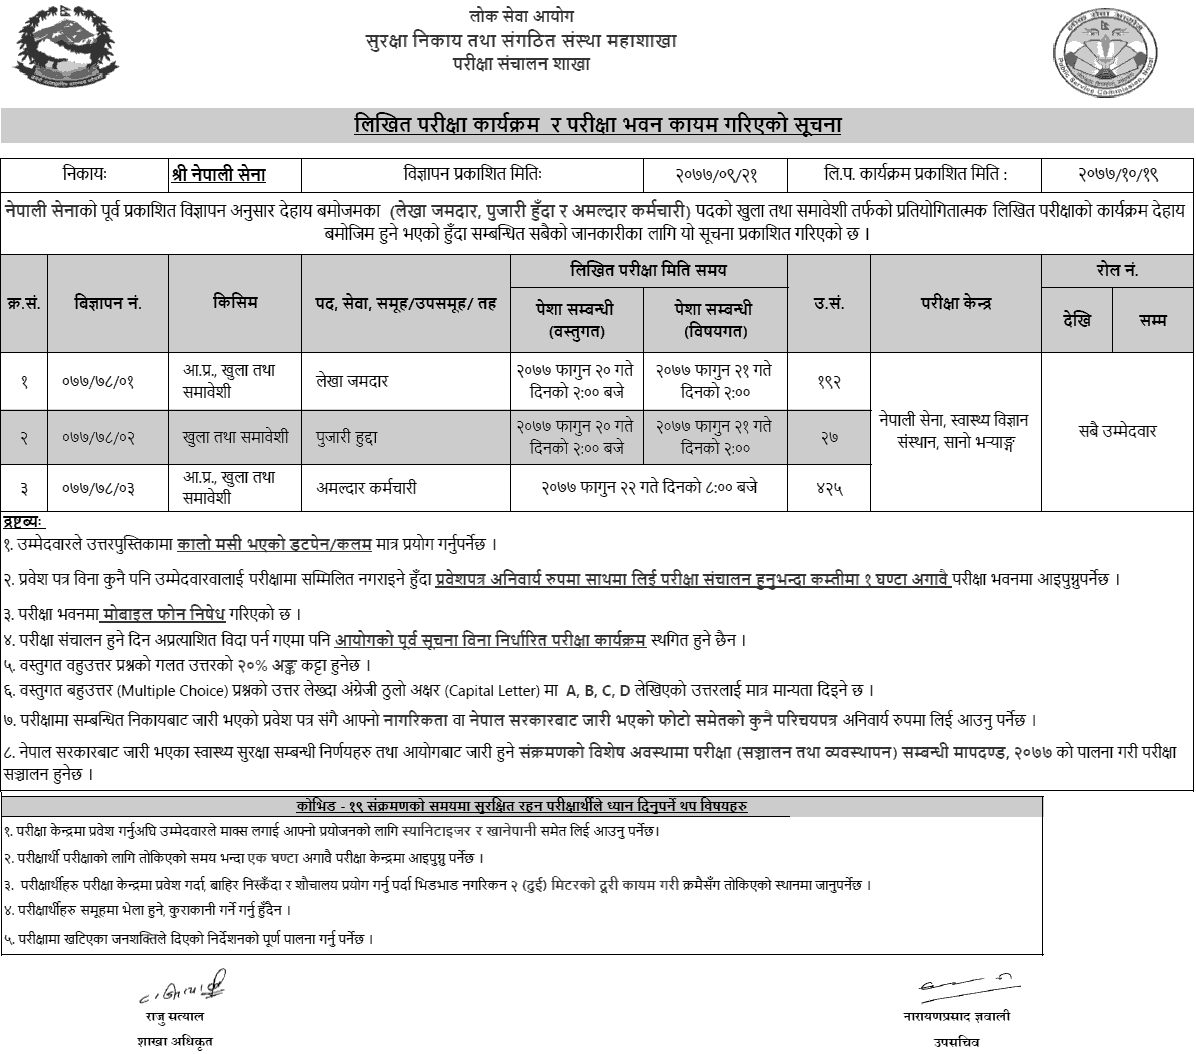 Nepal Army Lekha Jamdar, Pujari Hudda and Amaldar Written Exam Schedule and Exam Center